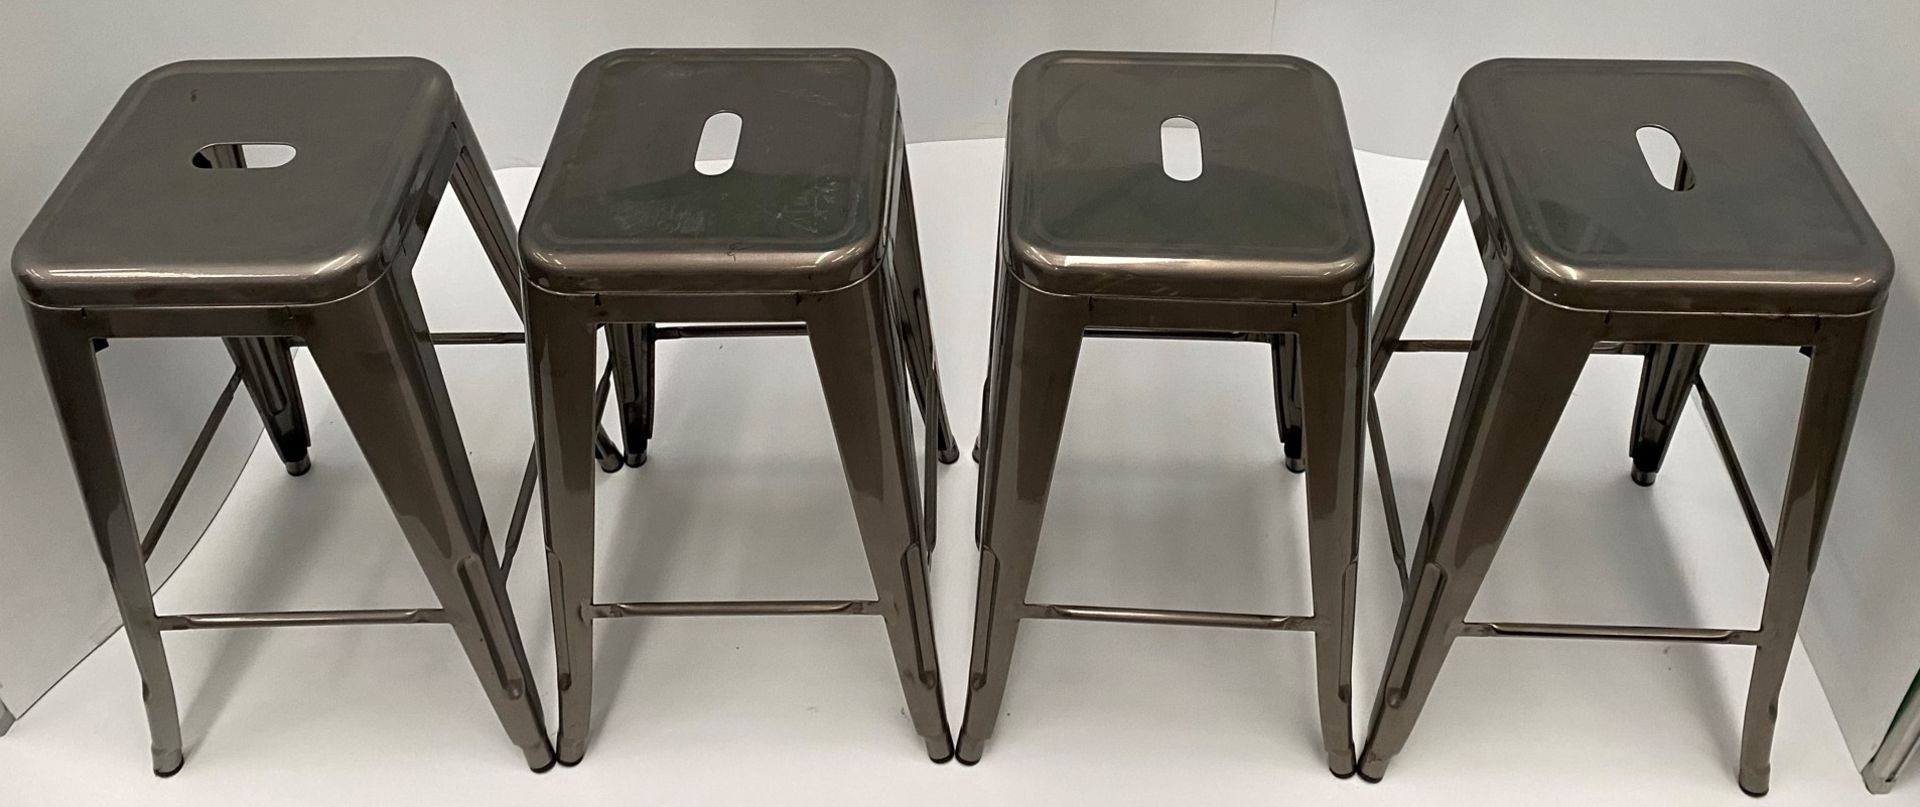 4 x Tolix metal high stools (660mm) - Image 2 of 2